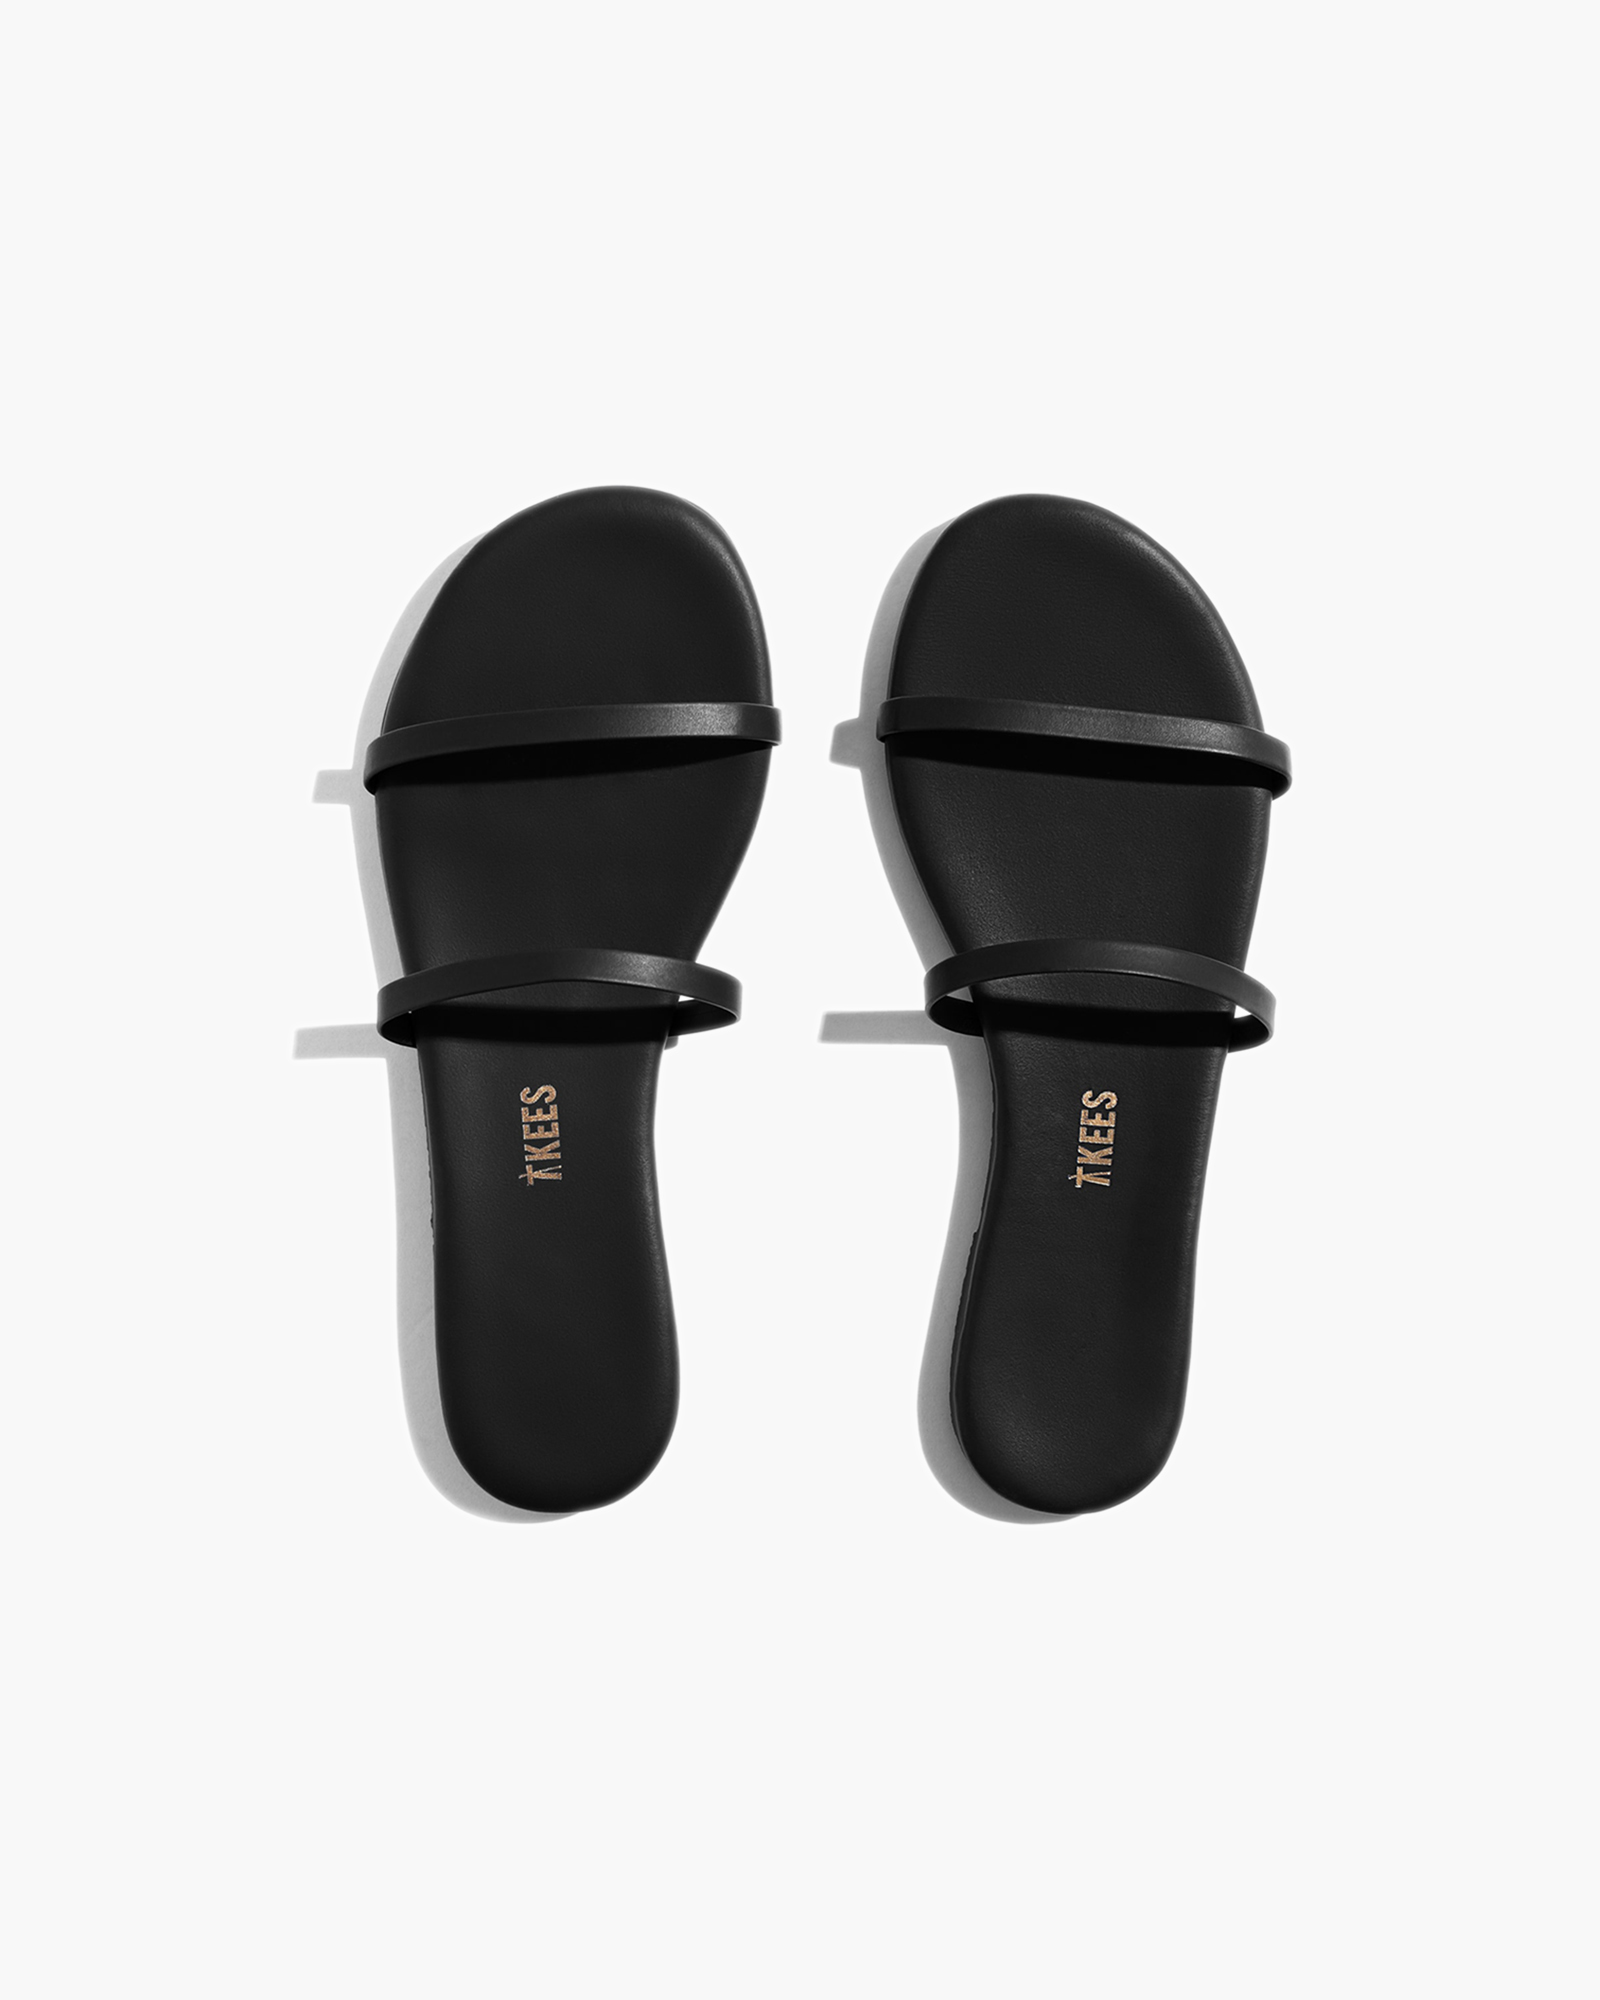 gemma sandal - product page